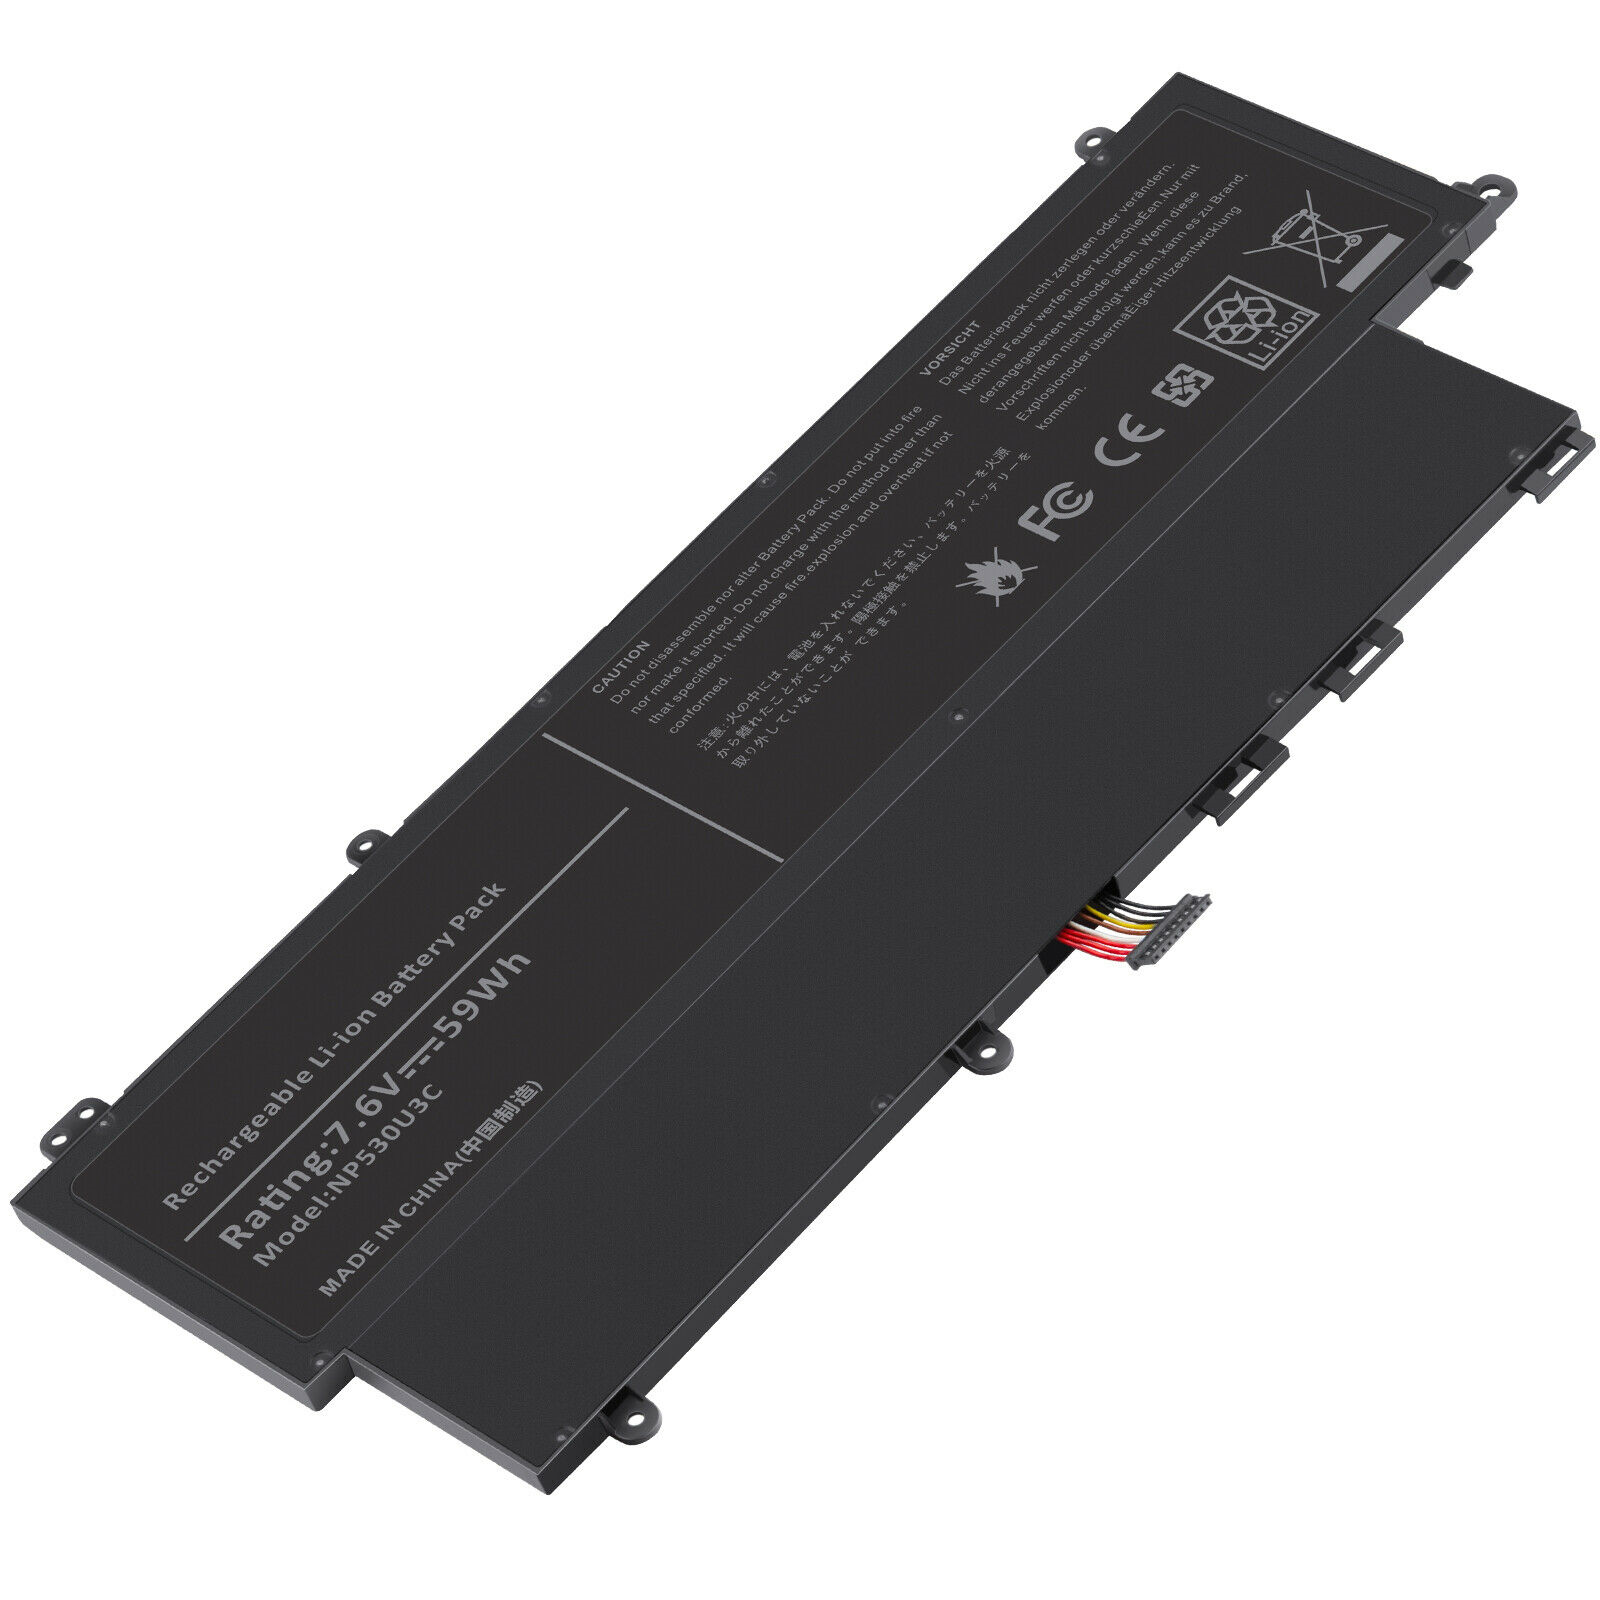 Samsung 532U3X-K01 Replacement Battery